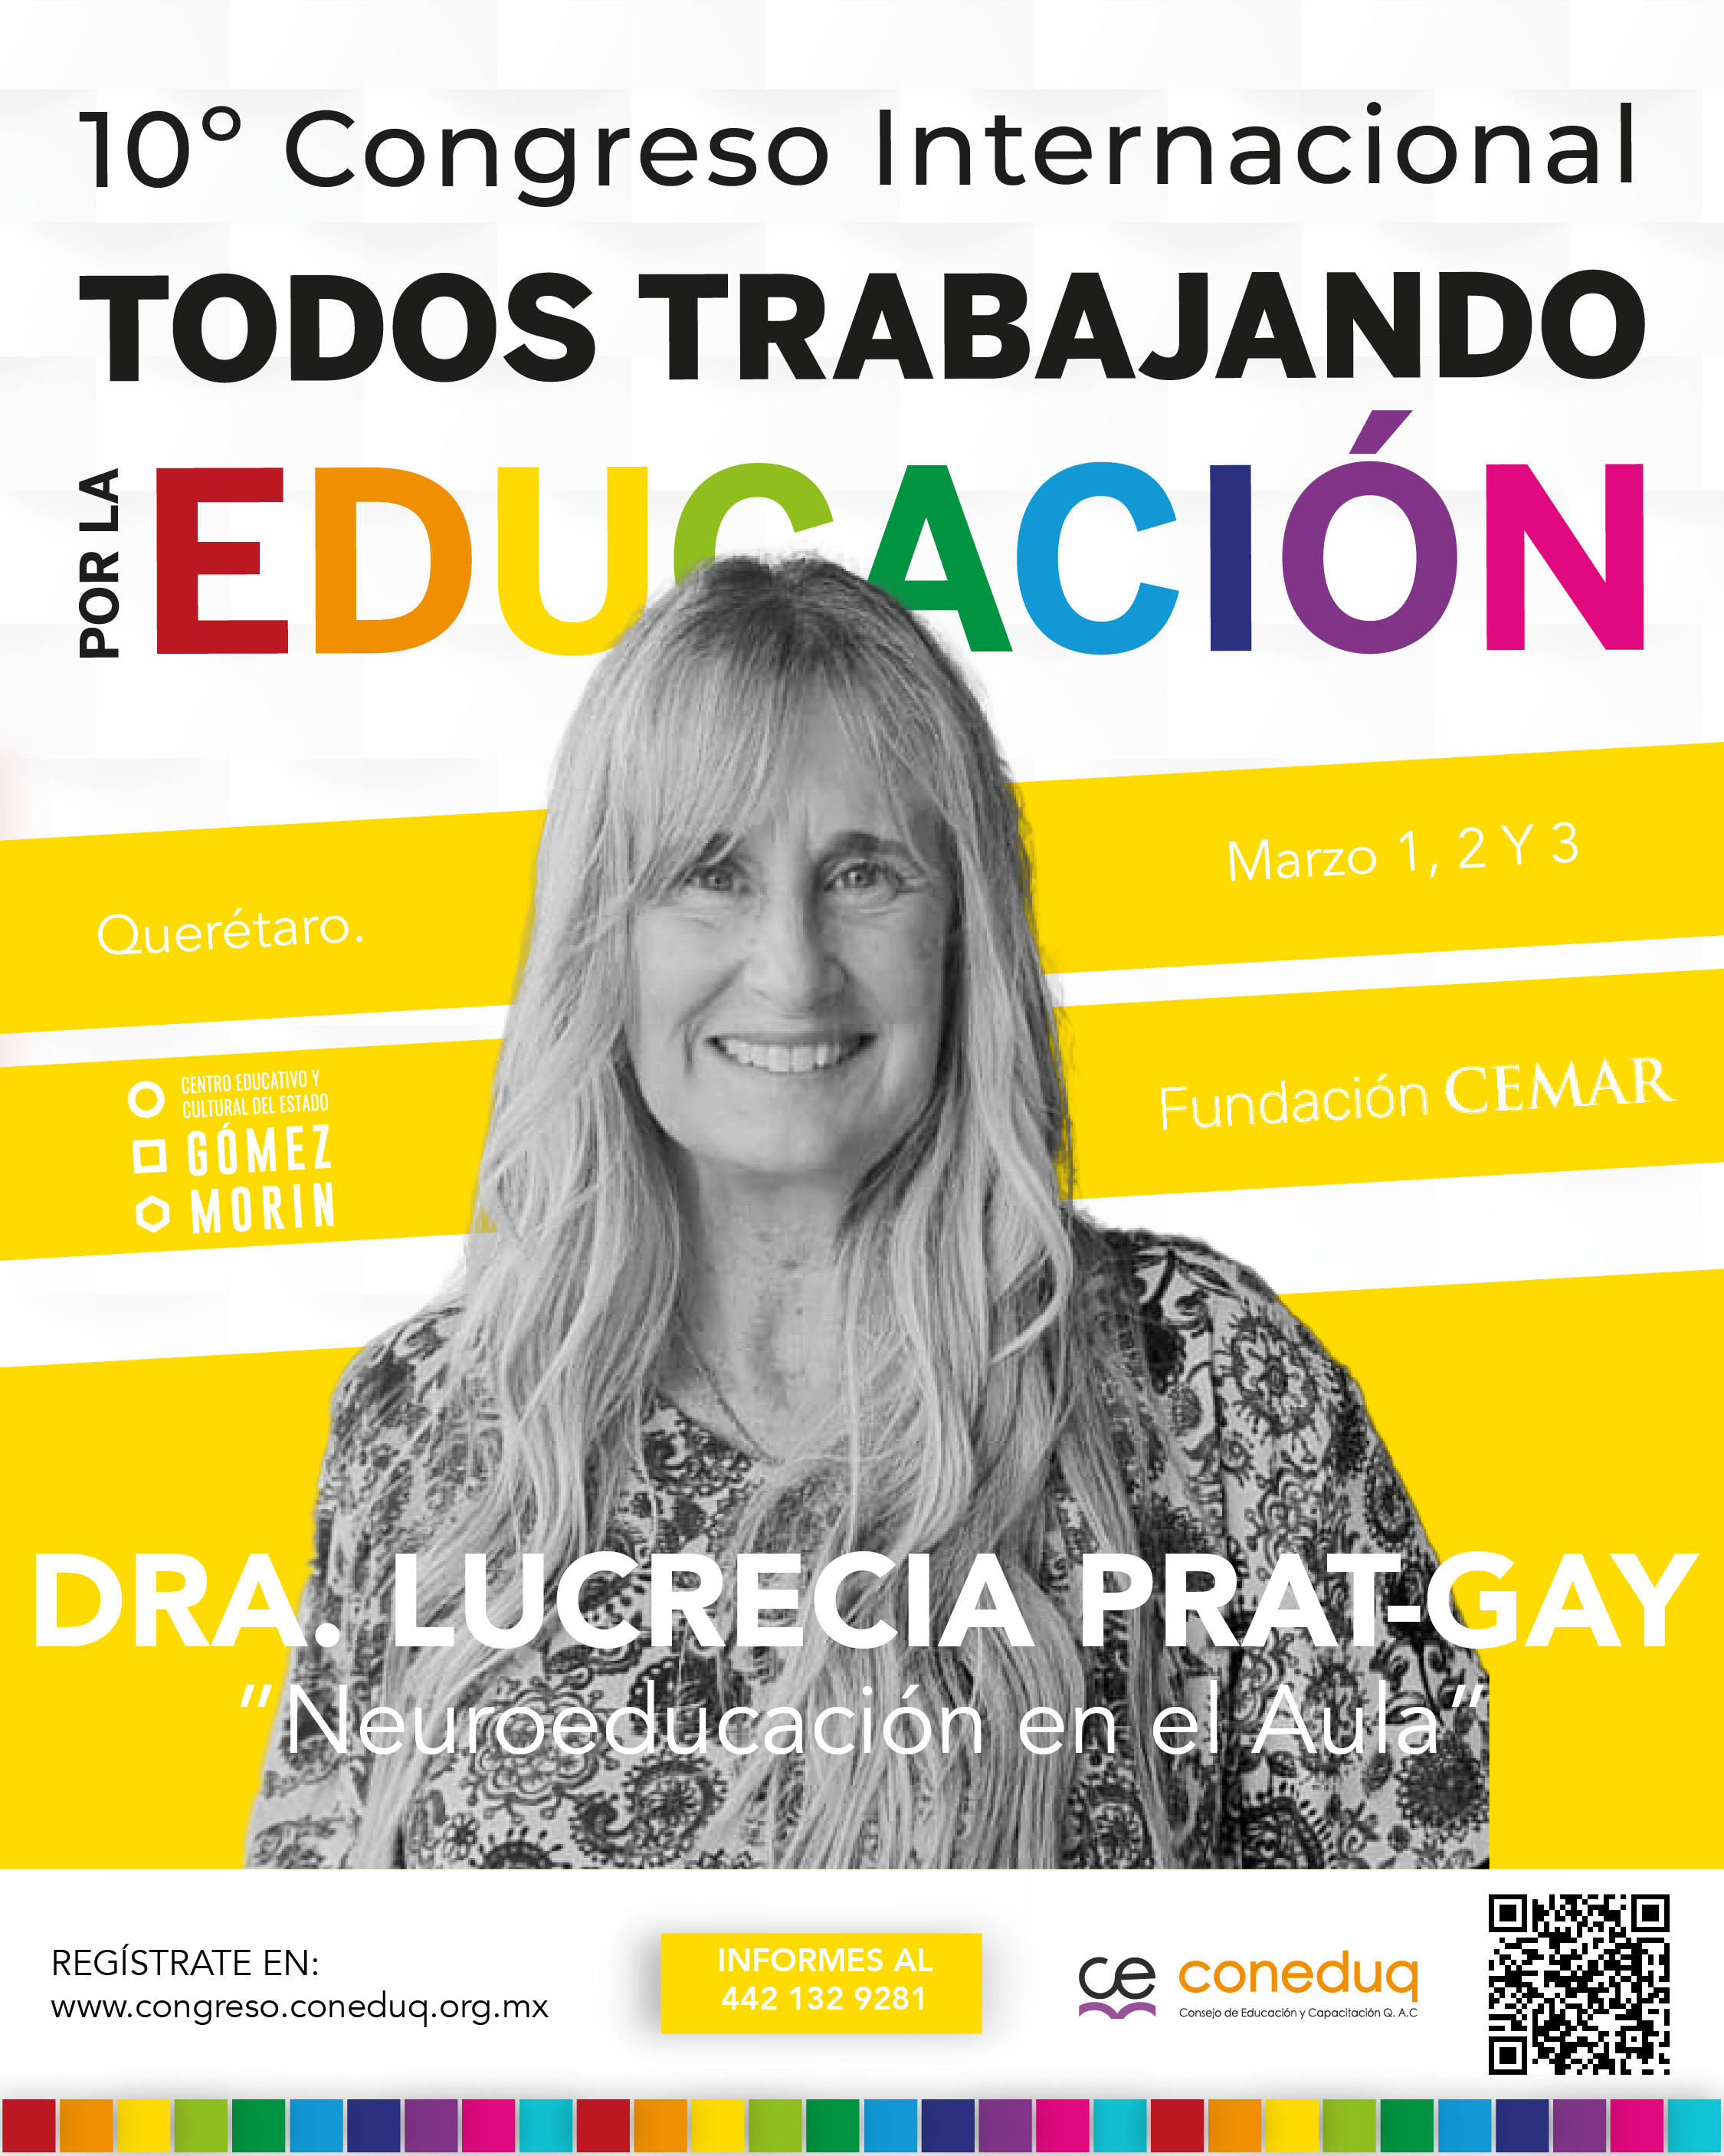 DRA. LUCRECIA PRAT-GAY